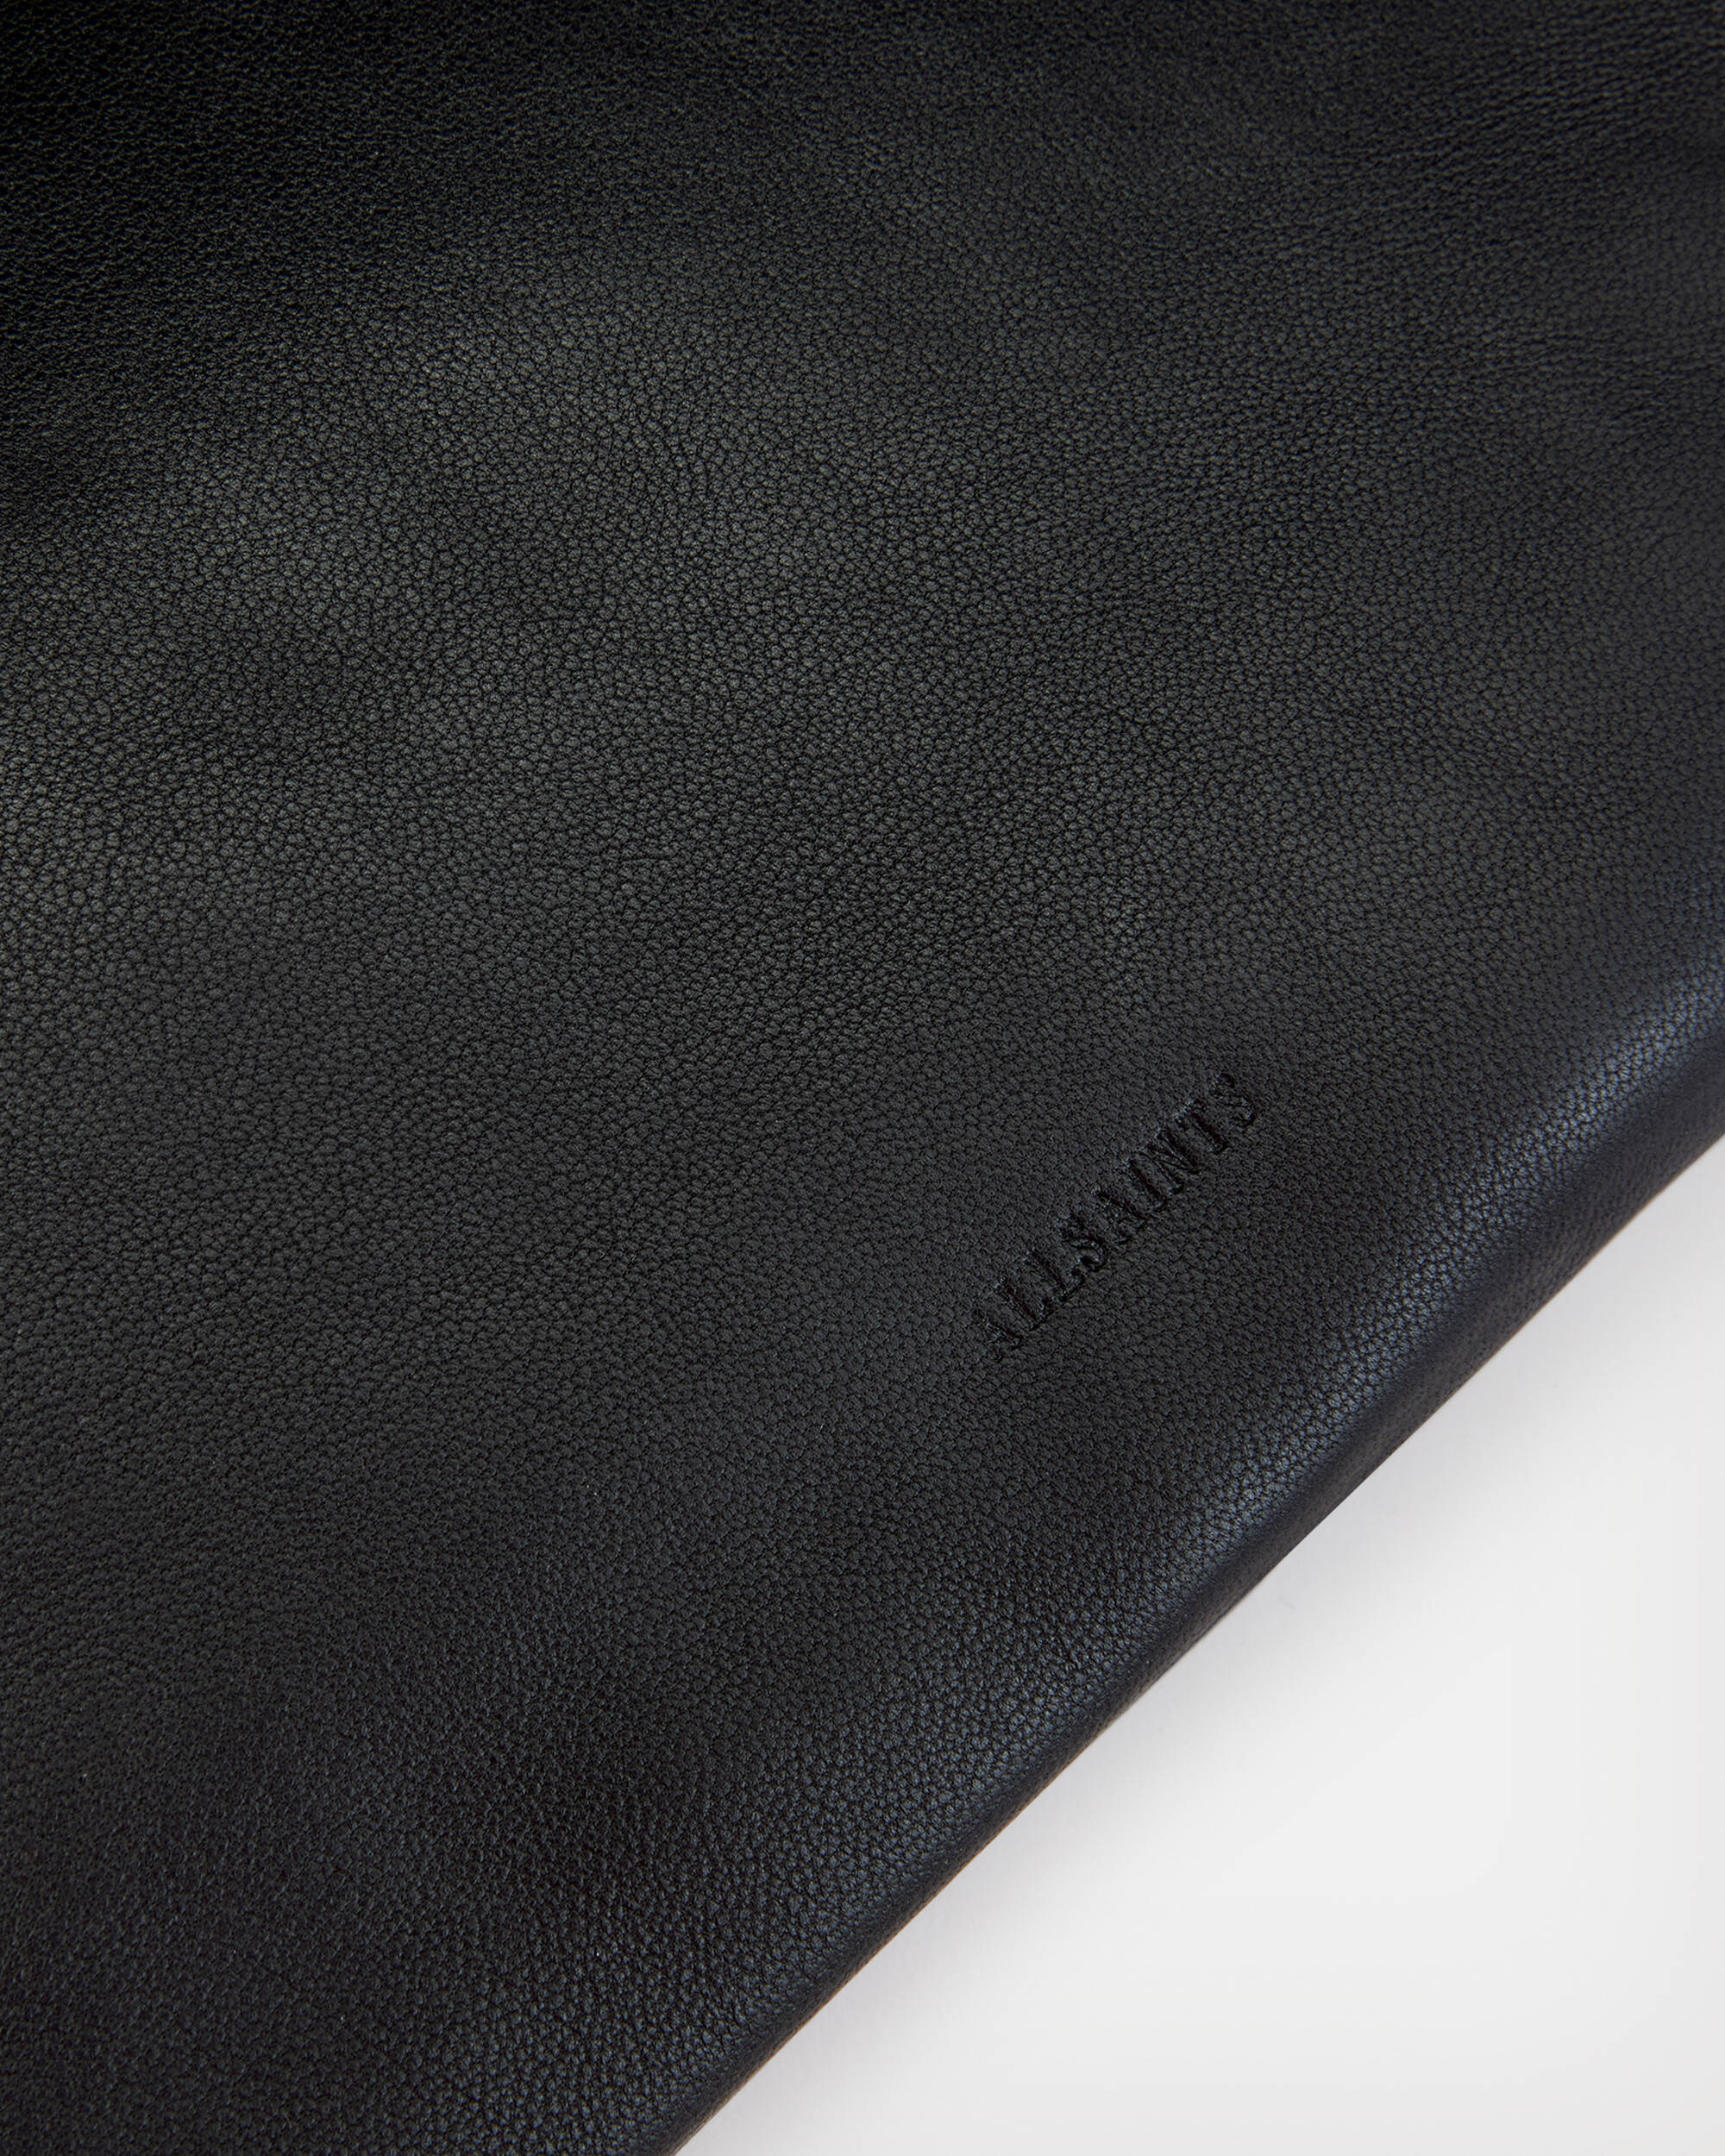 Bettina Studded Leather Clutch Bag Black | ALLSAINTS